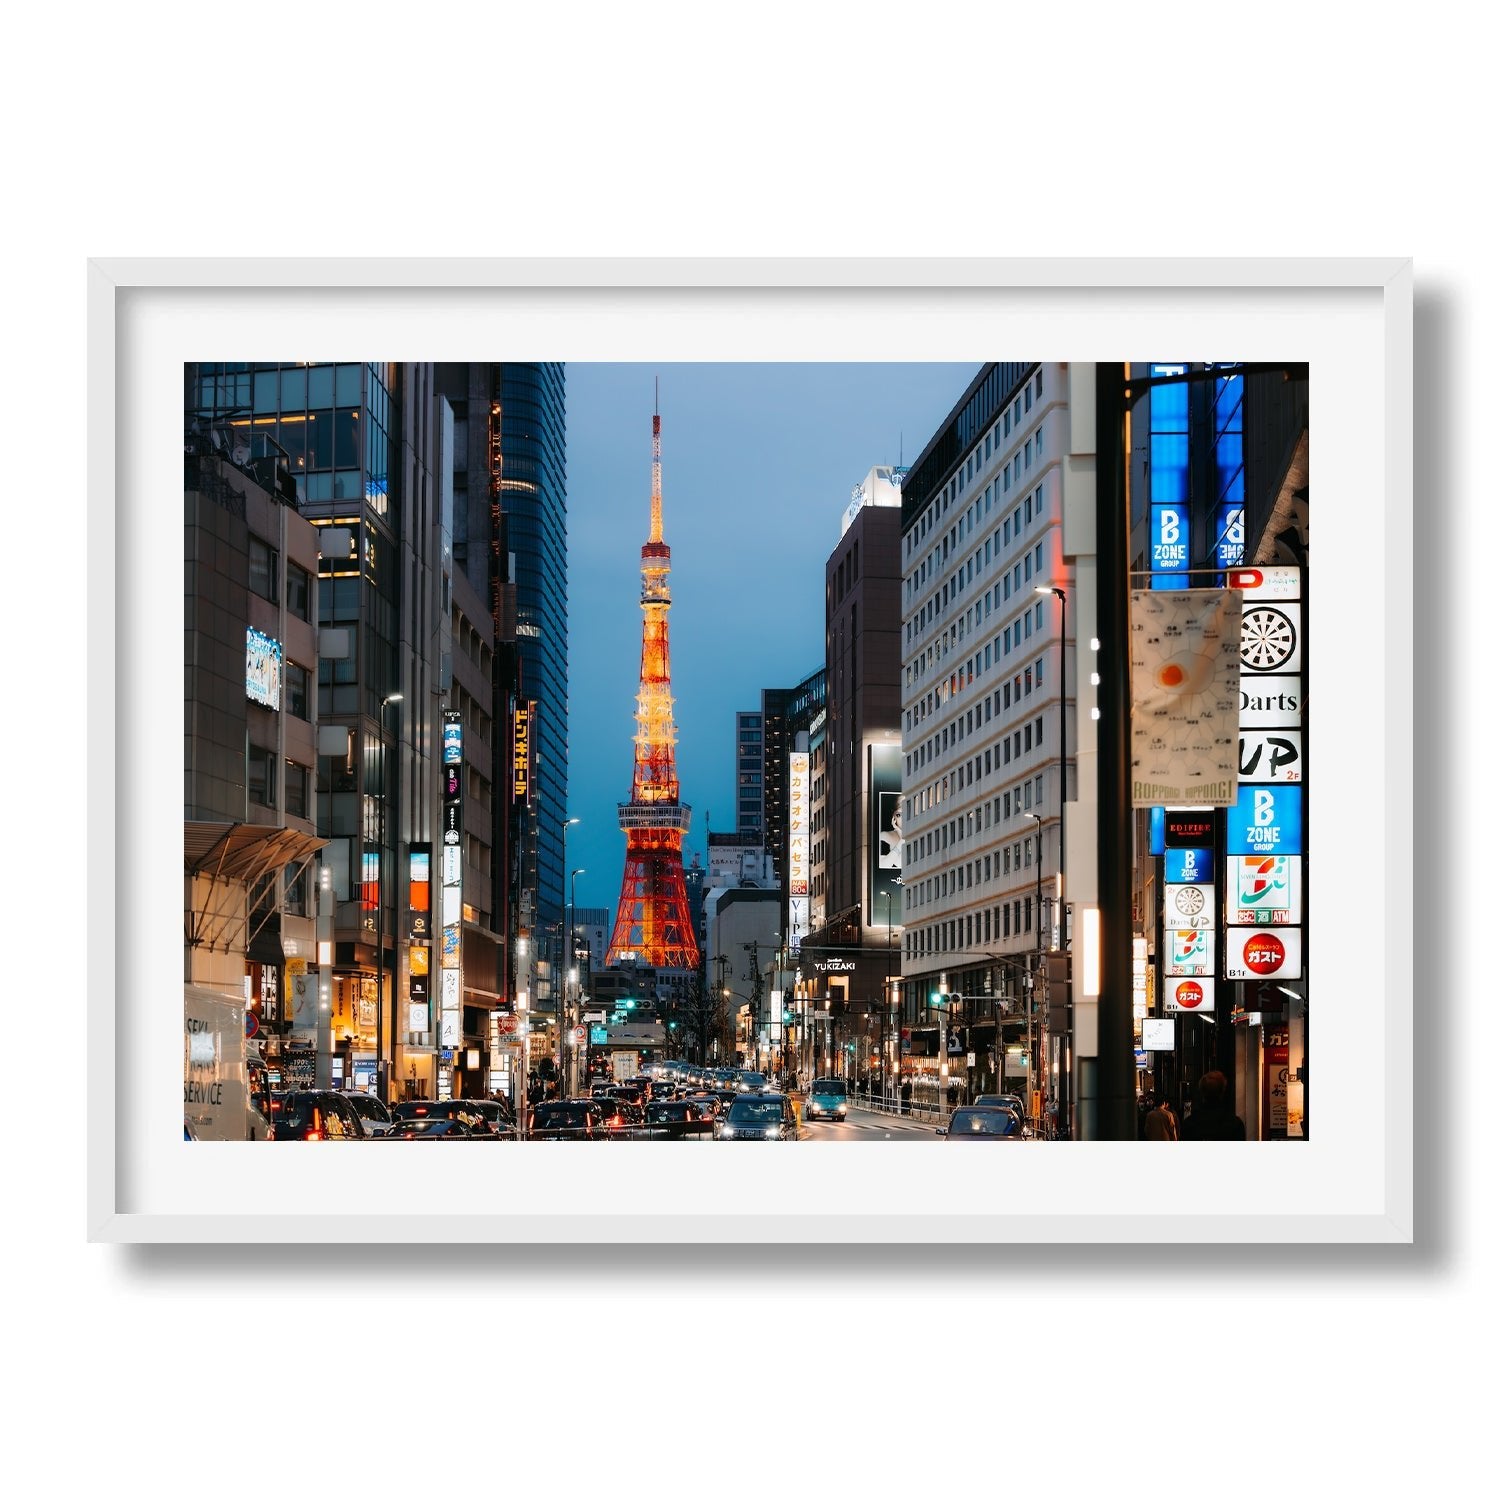 Tokyo Tower Roppongi - Peter Yan Studio